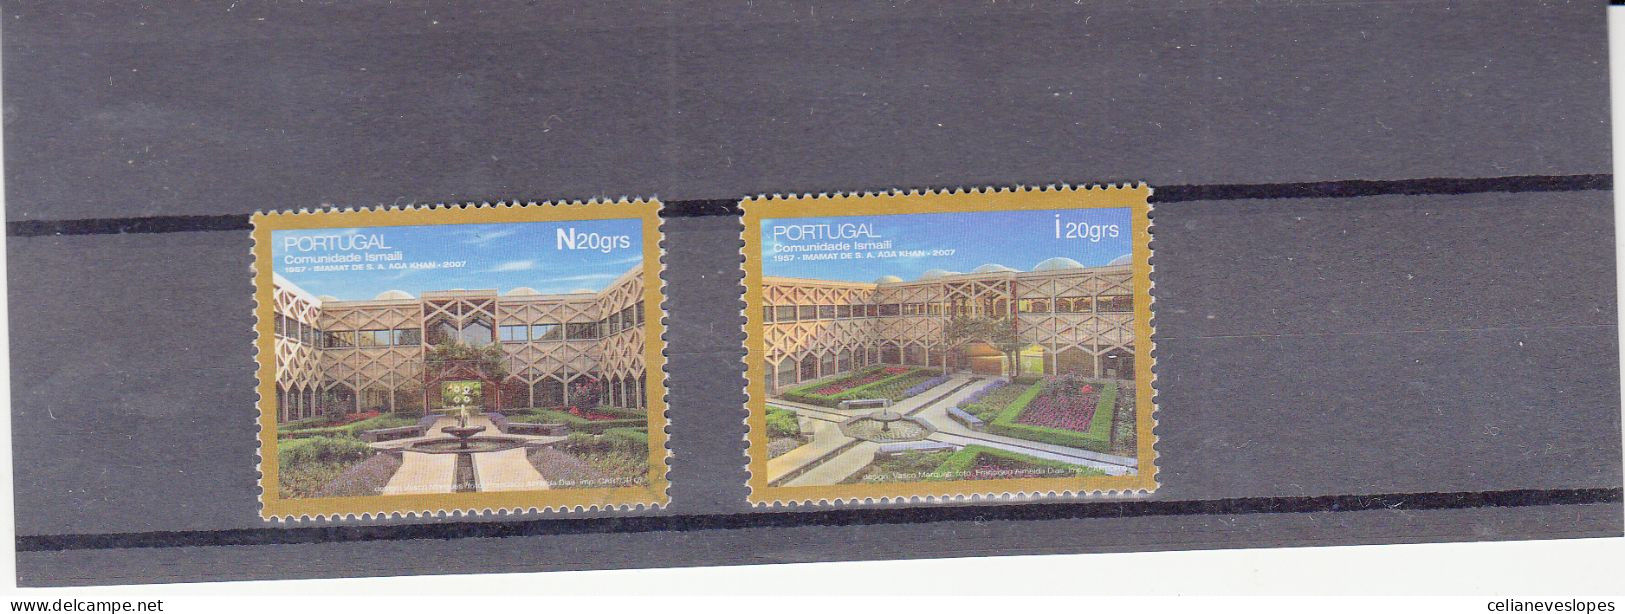 Portugal, Comunidade Ismaili Em Portugal, 2007, Mundifil Nº 3653 A 3654 Used - Used Stamps